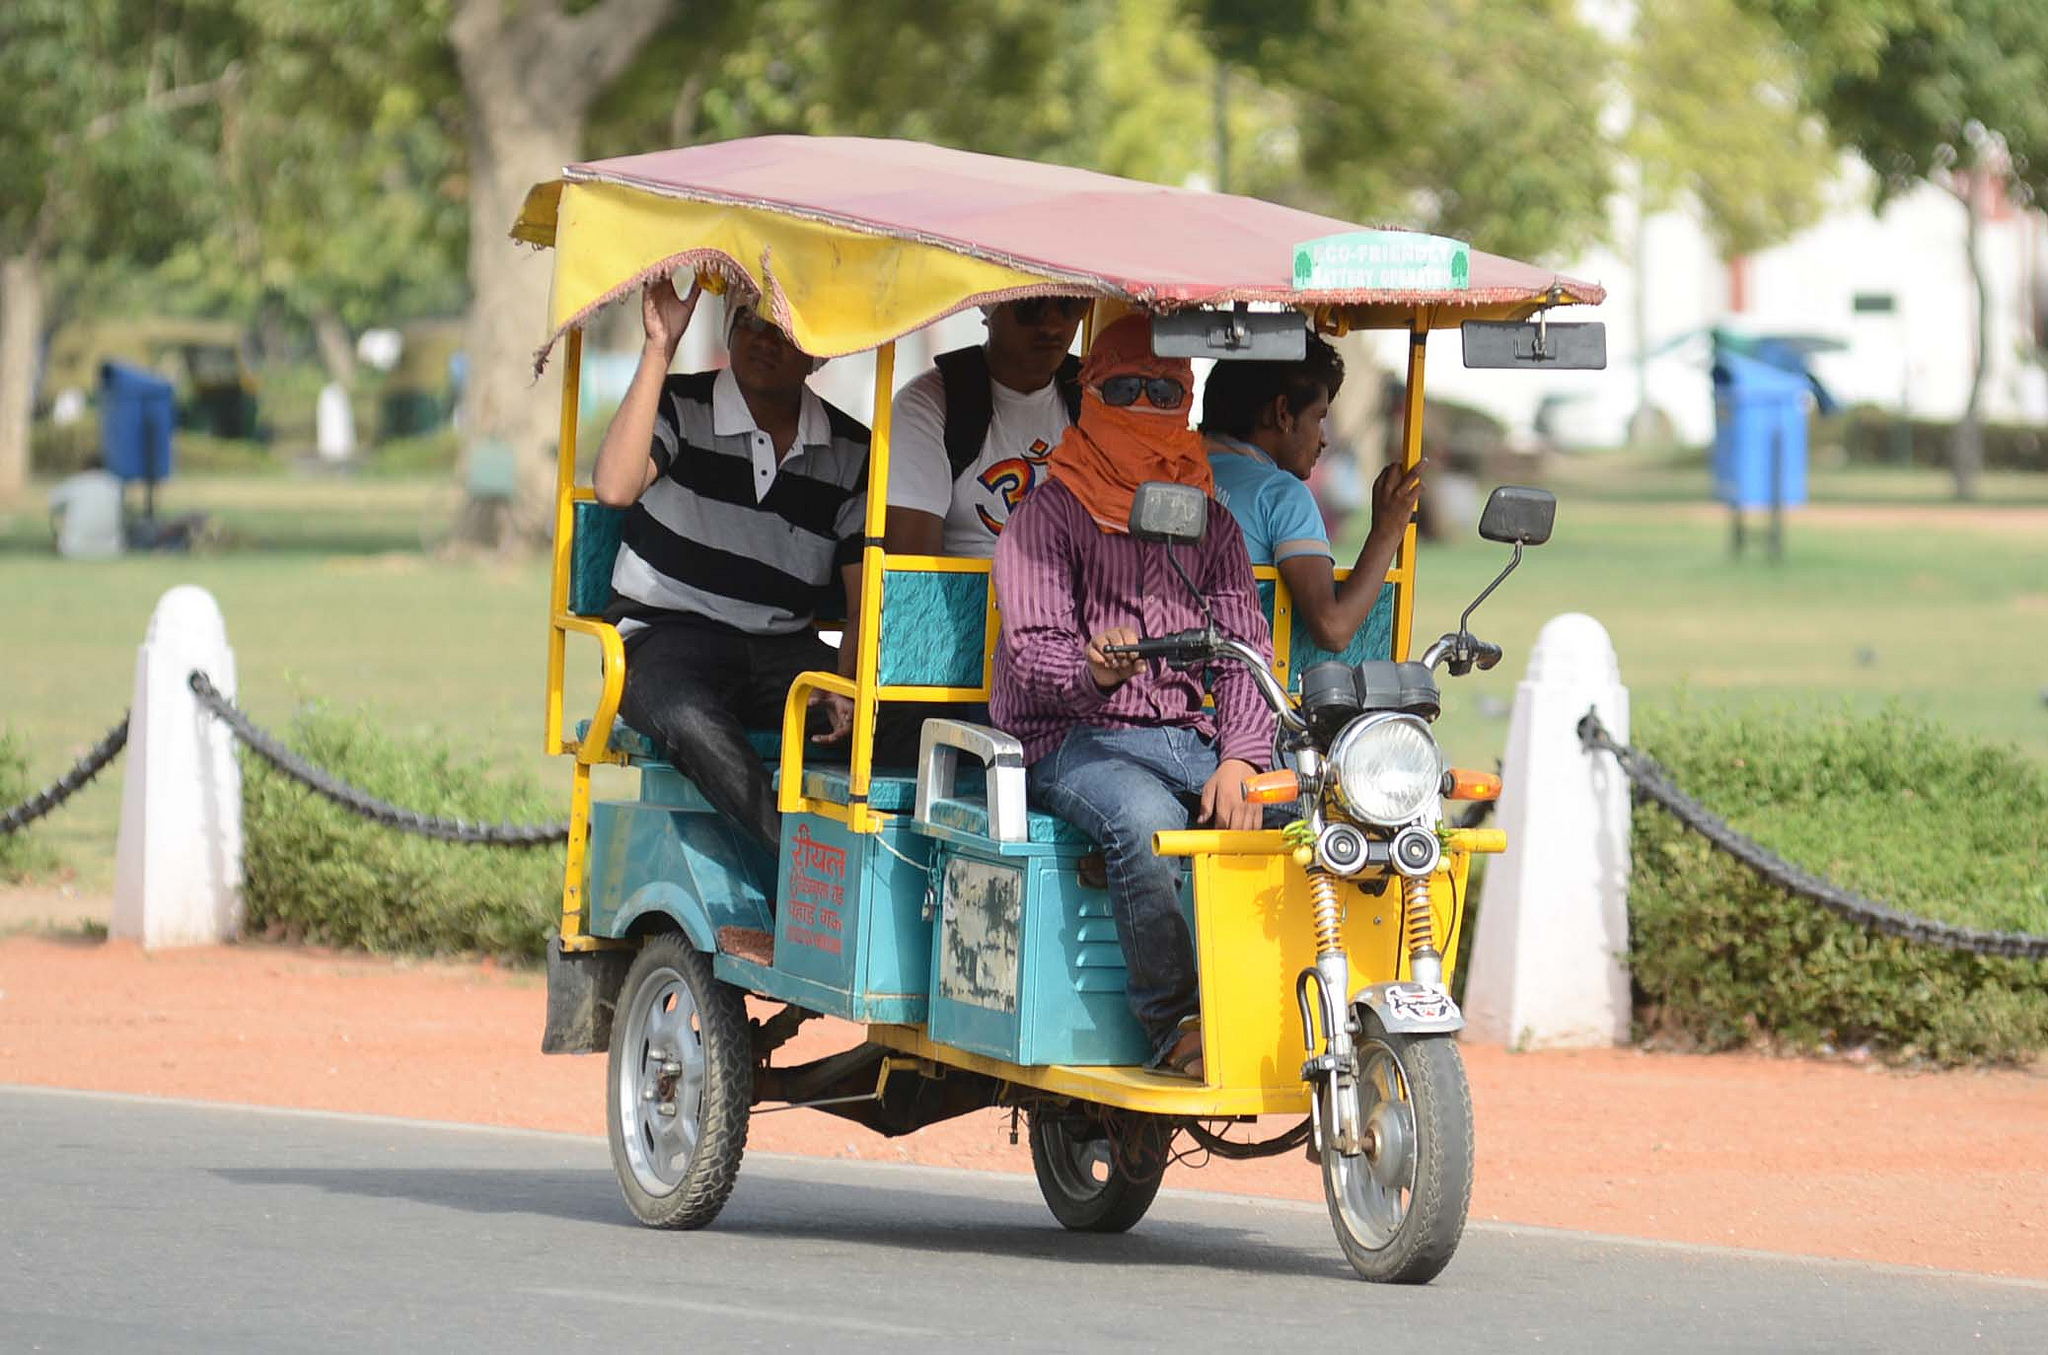 Regulation can help erickshaws transform urban mobility across India